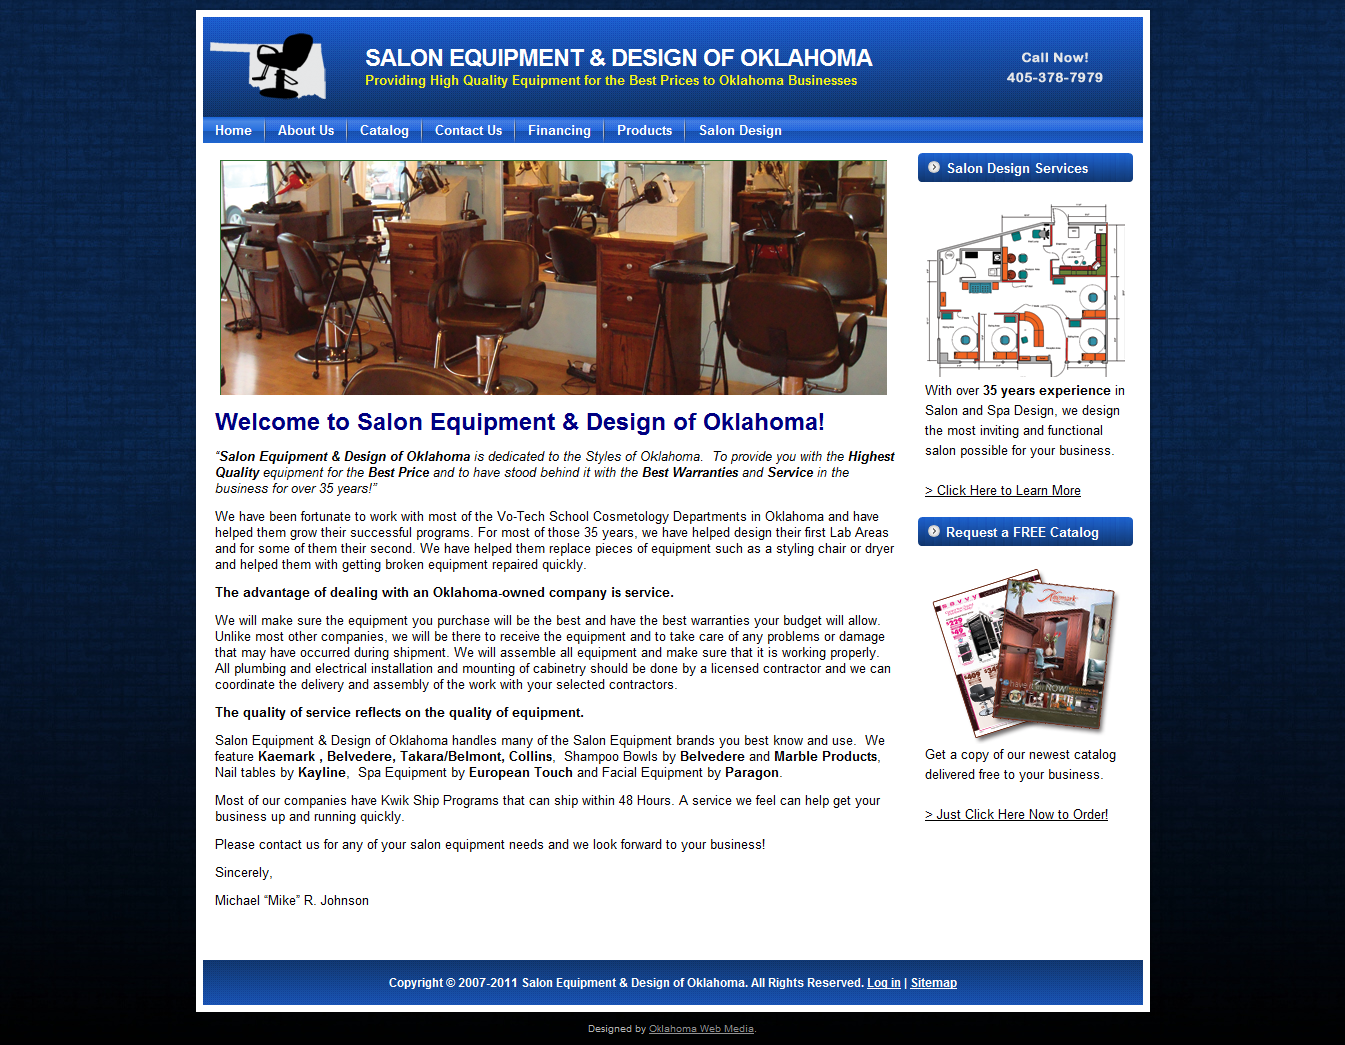 www.salonequipmentoklahoma.com